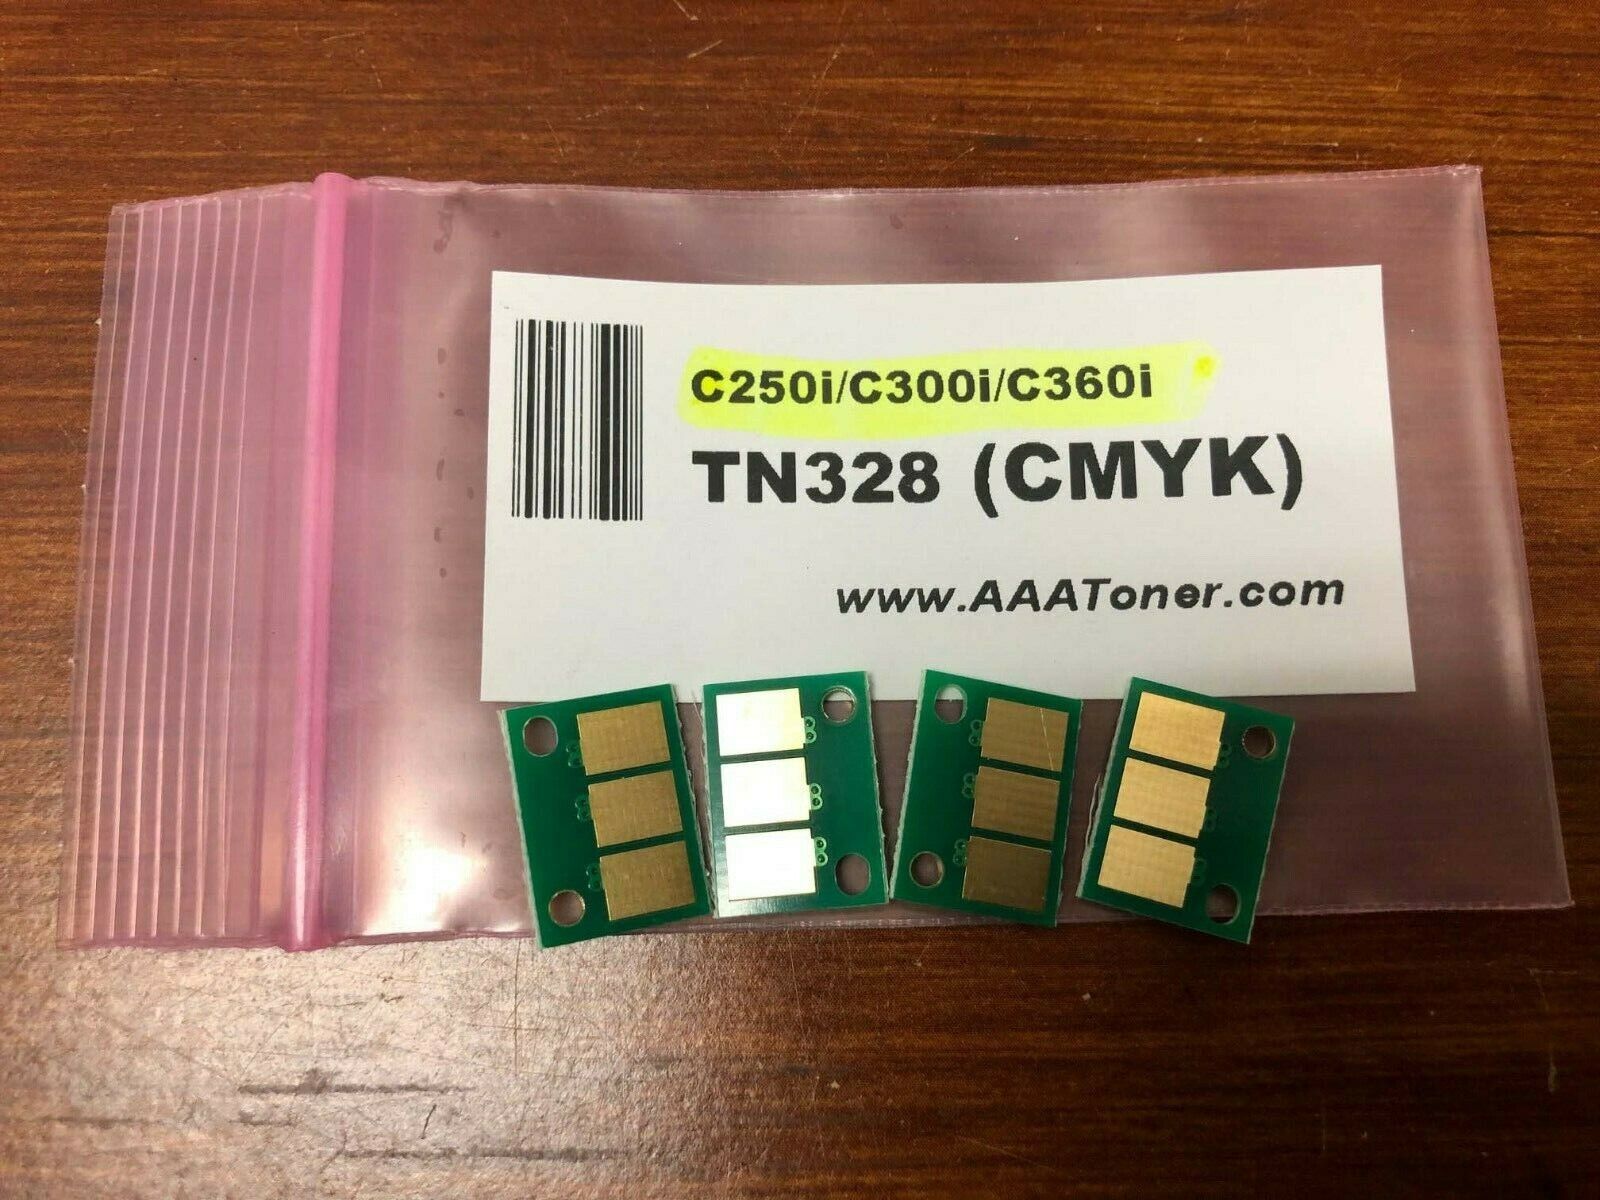 4 x Toner Chips for Konica Minolta Bizhub C250i, C300i, C360i (TN328) Refill